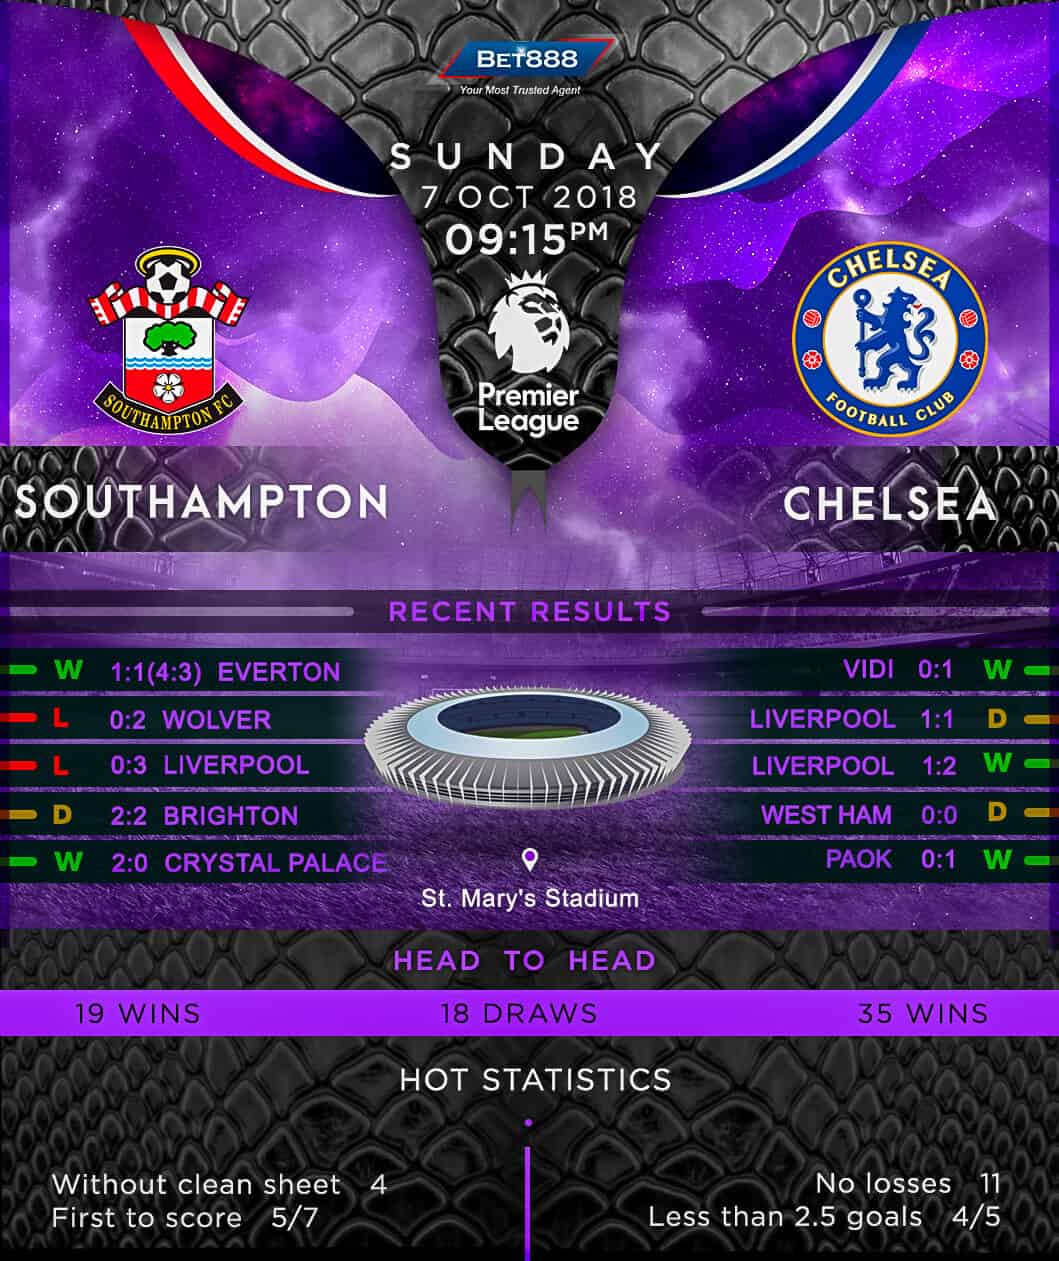 Southampton vs Chelsea 07/10/18